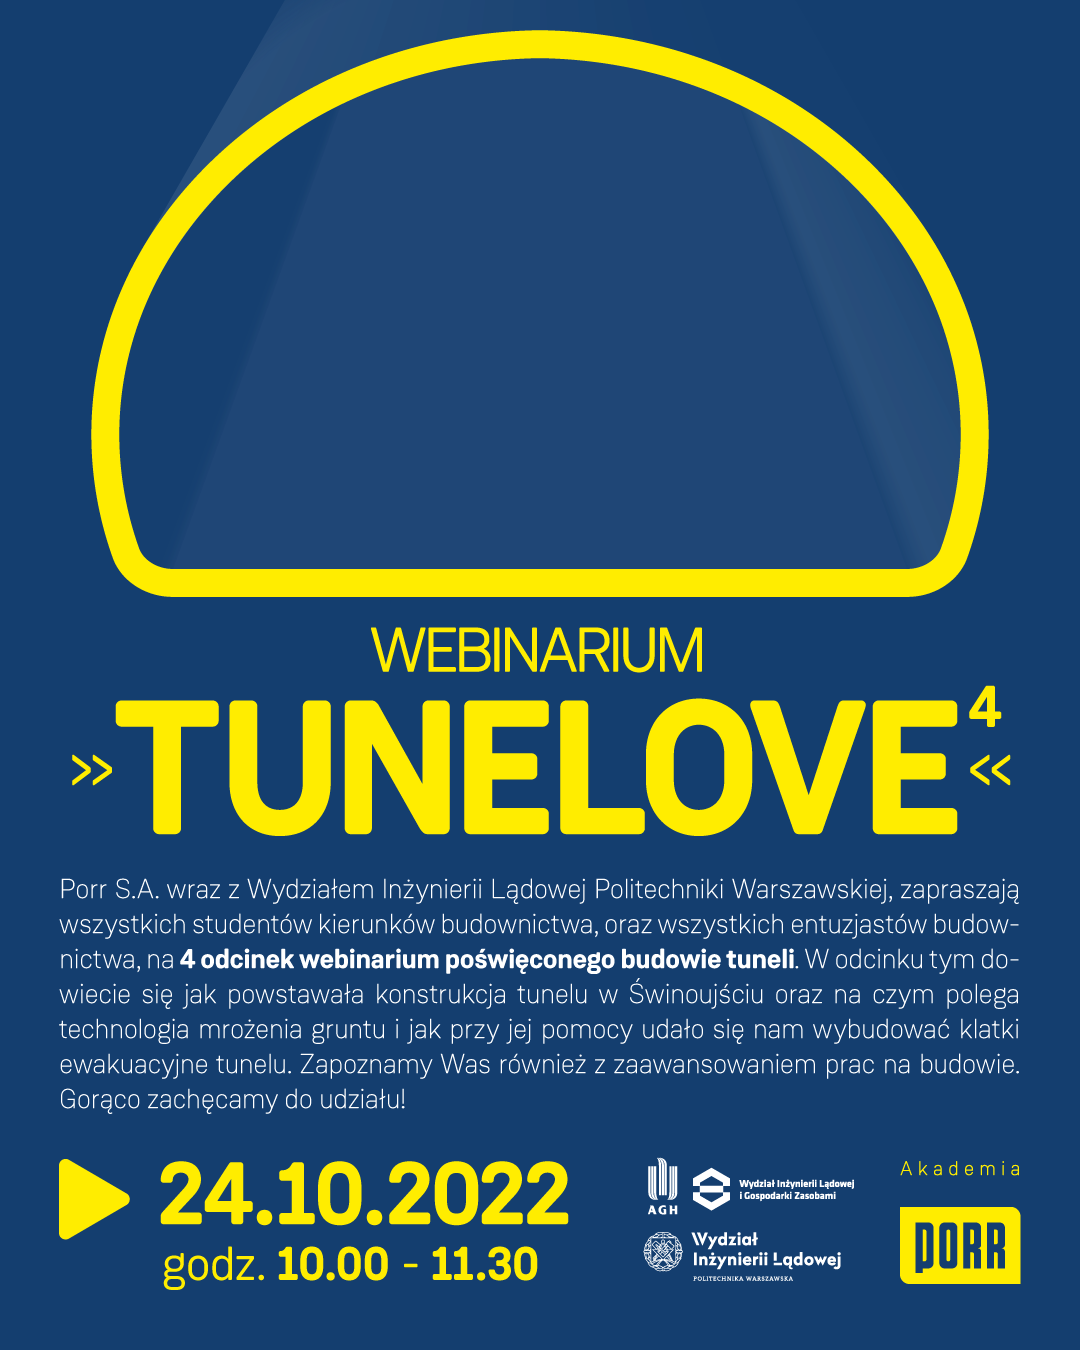 Webinarium >>Tunelove4